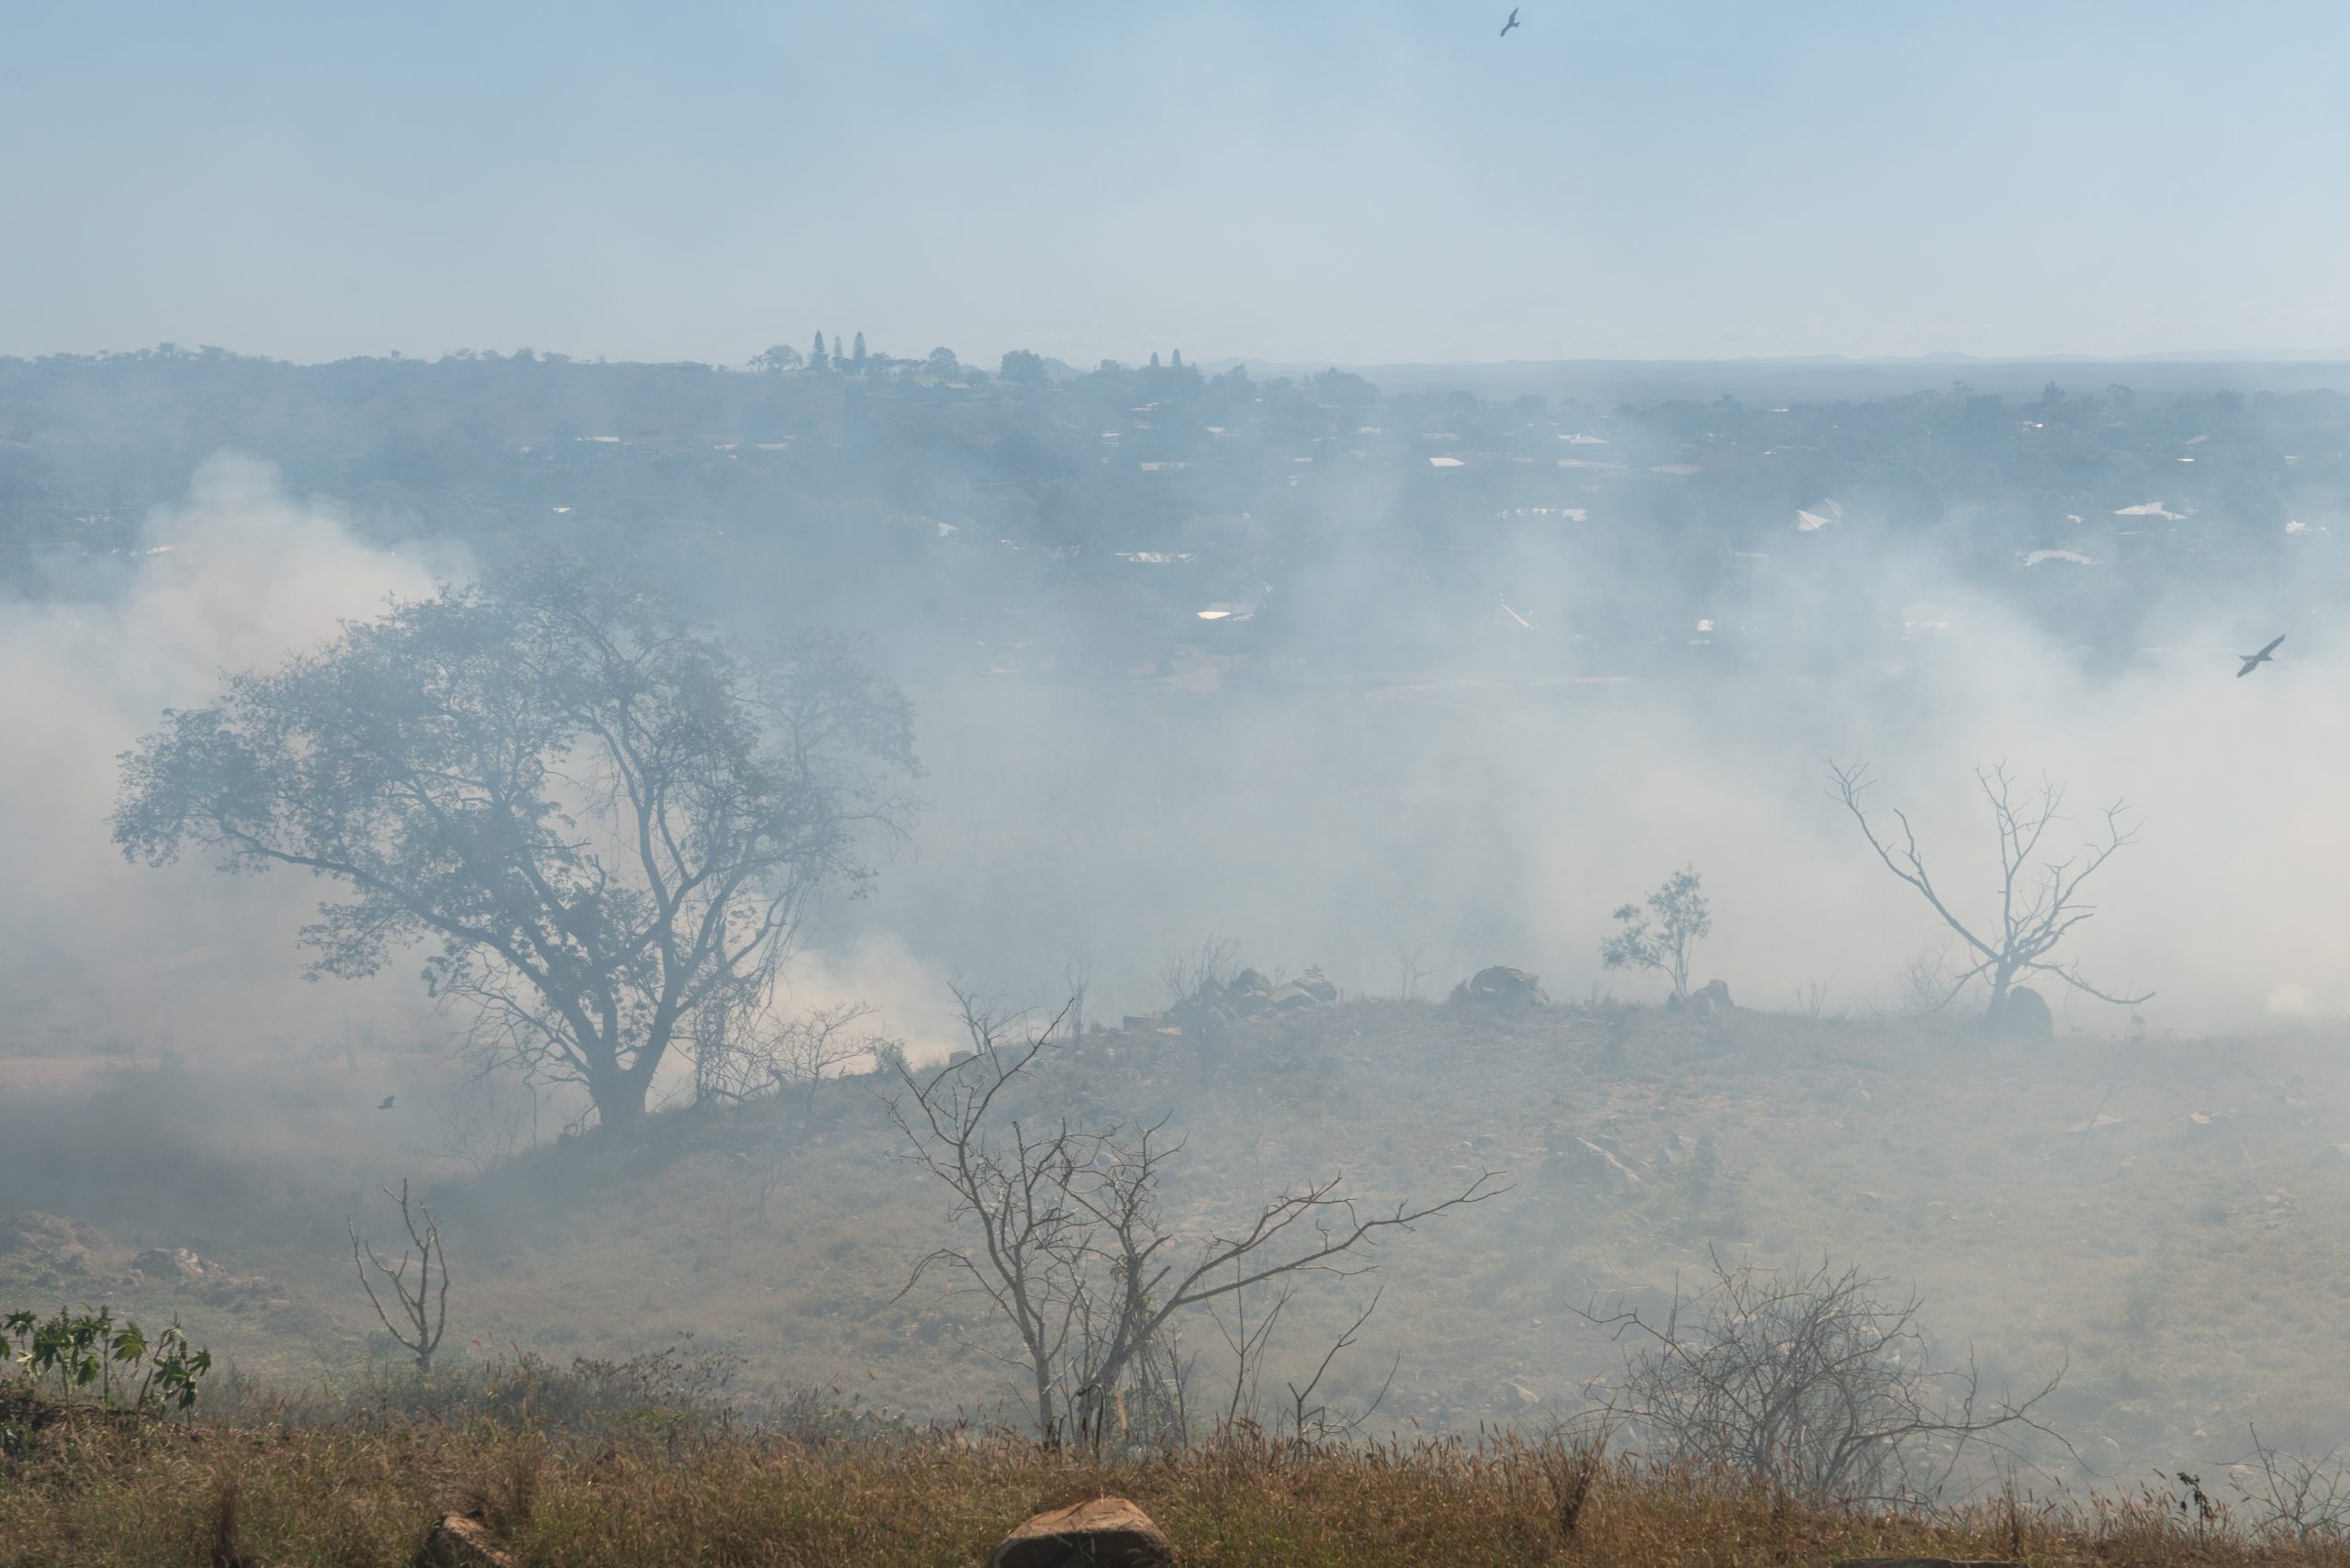 Bushfires have impacted the health of many Queenslanders.